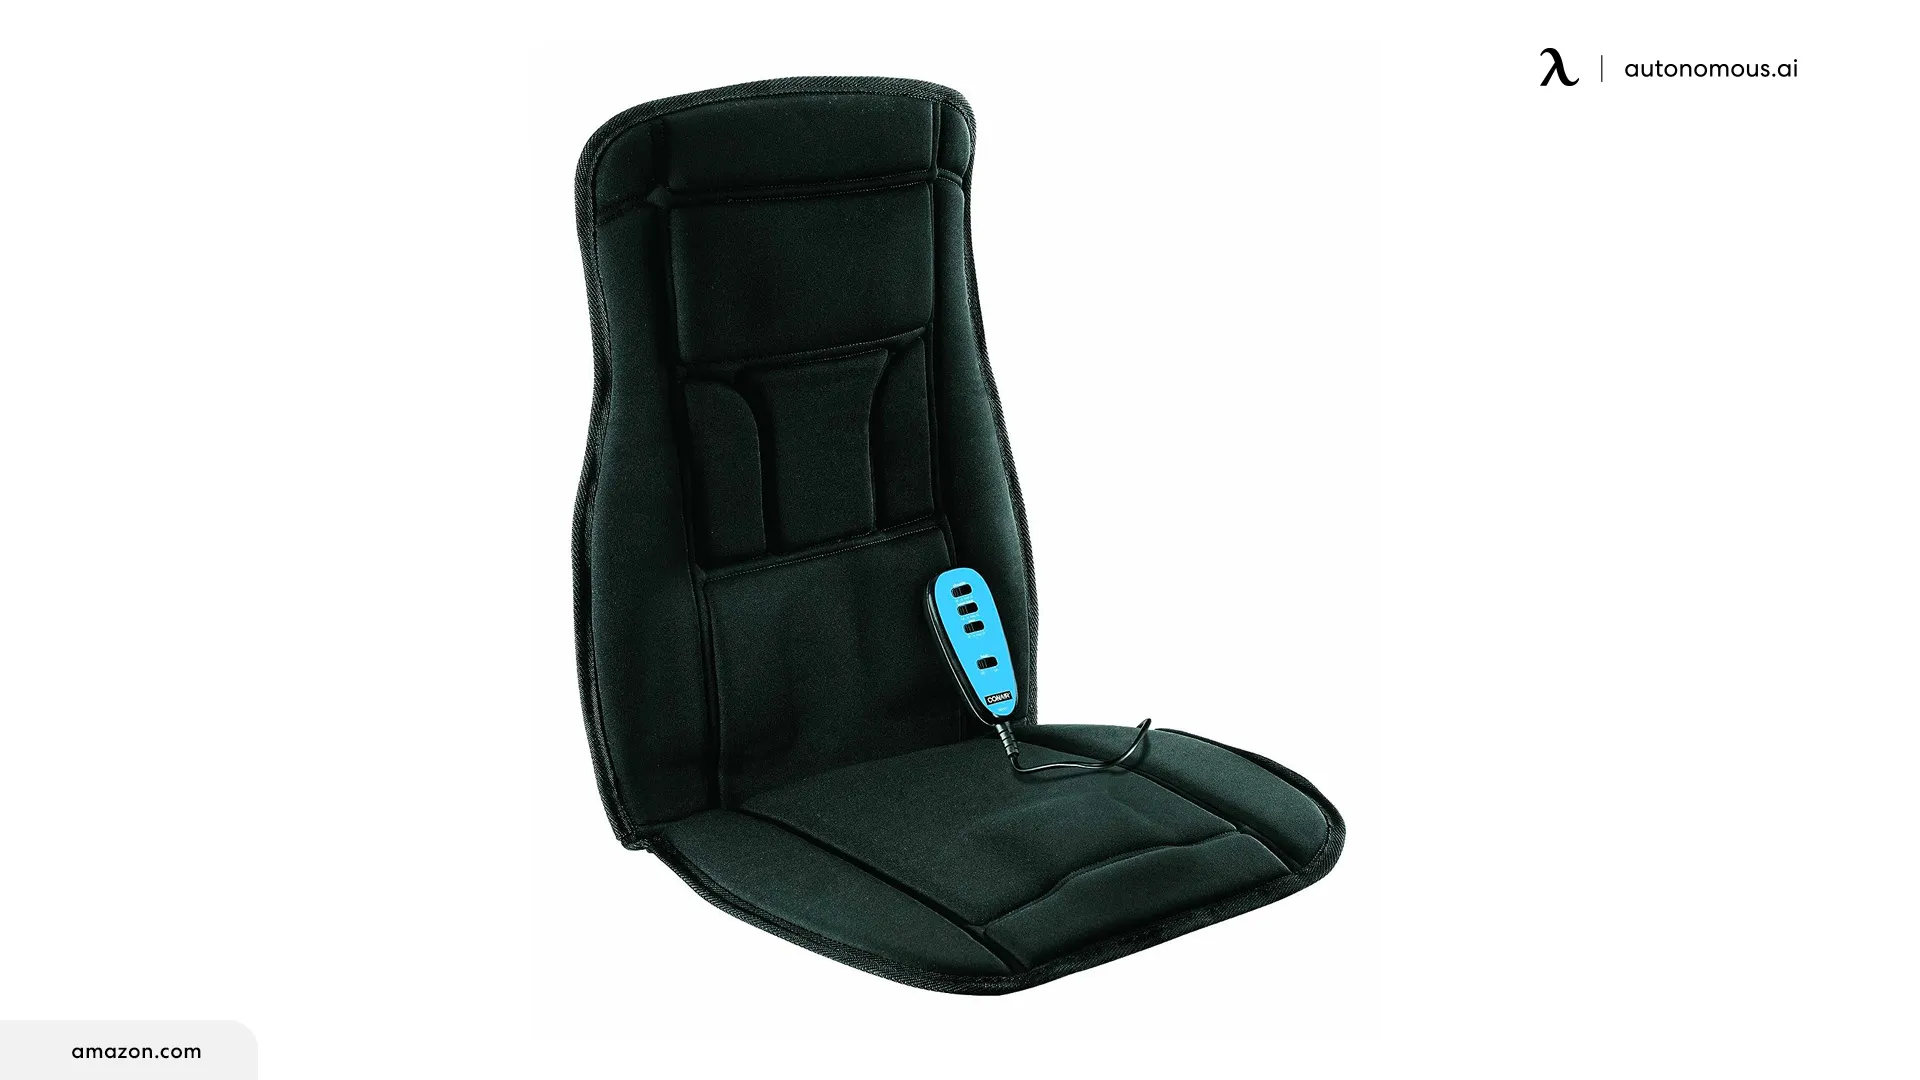 Conair Heat Massaging Seat Cushion